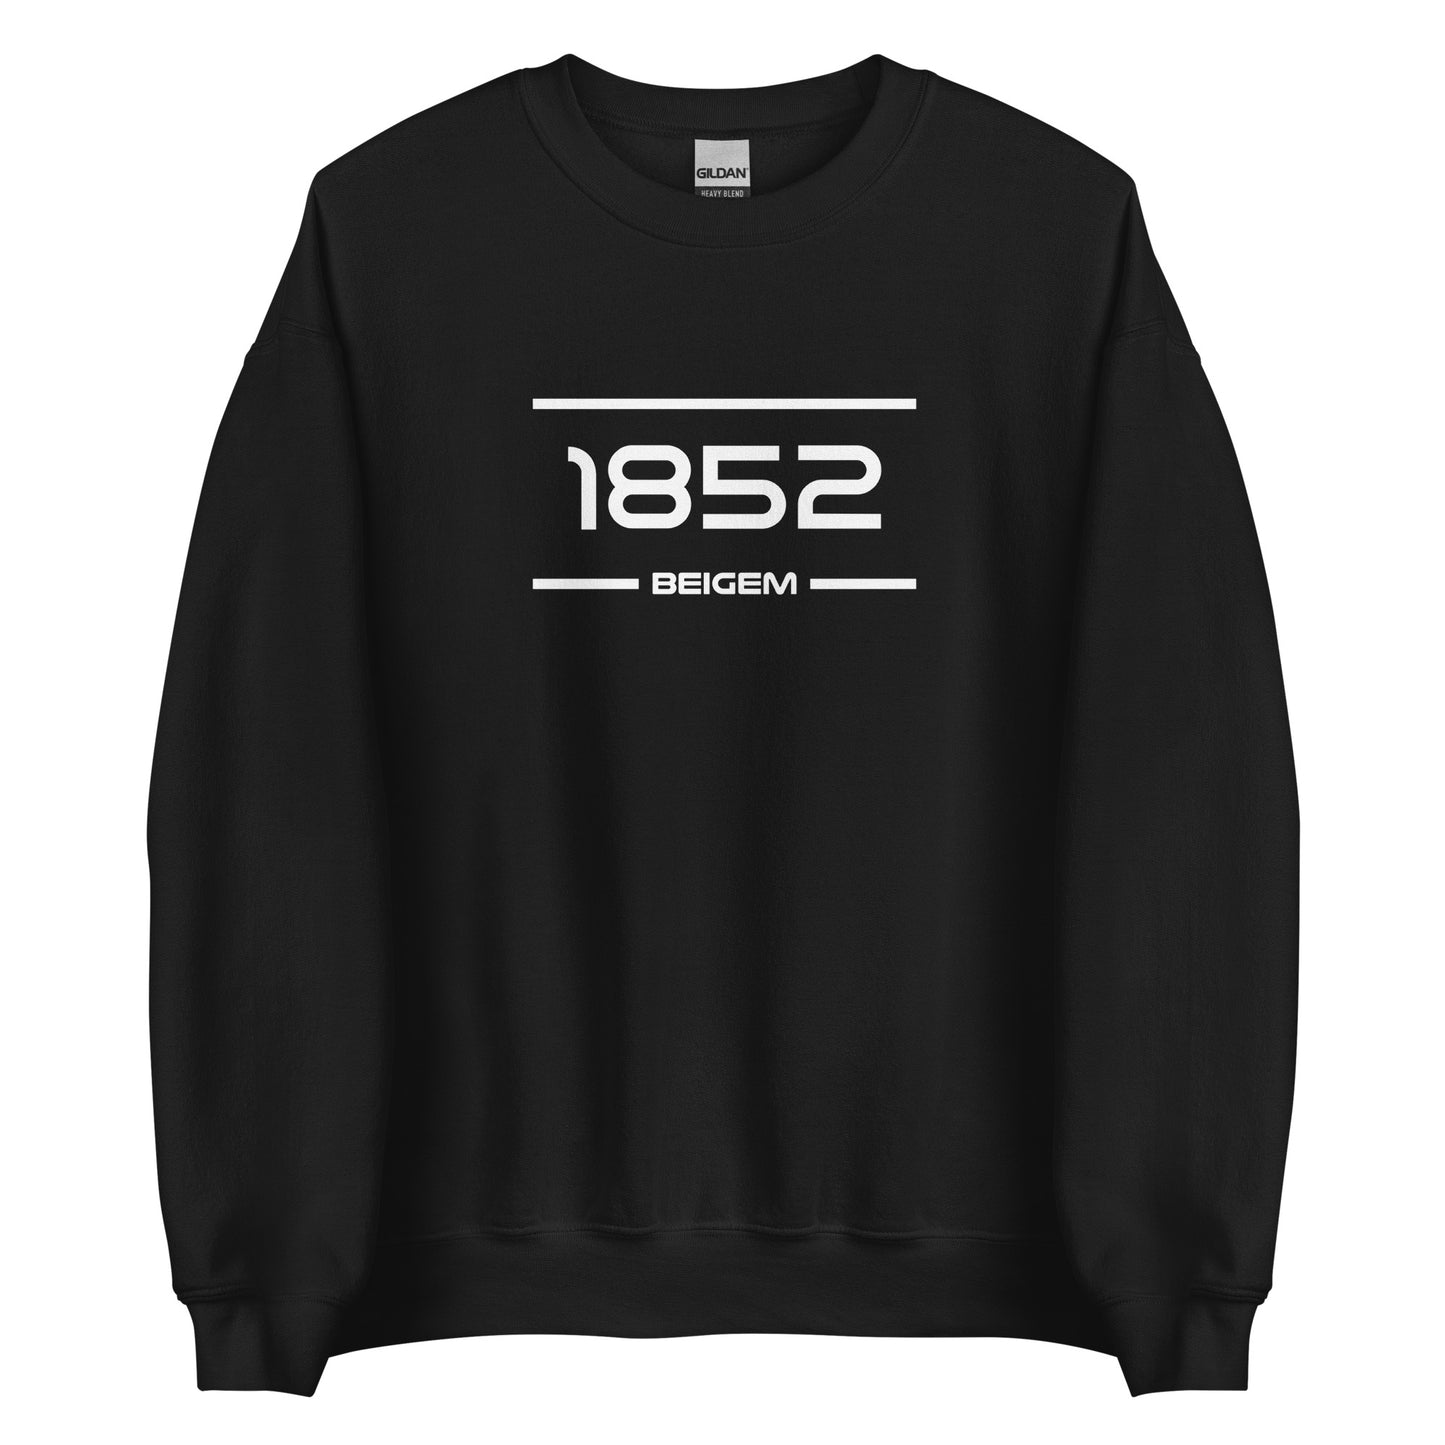 Sweater - 1852 - Beigem (M/V)